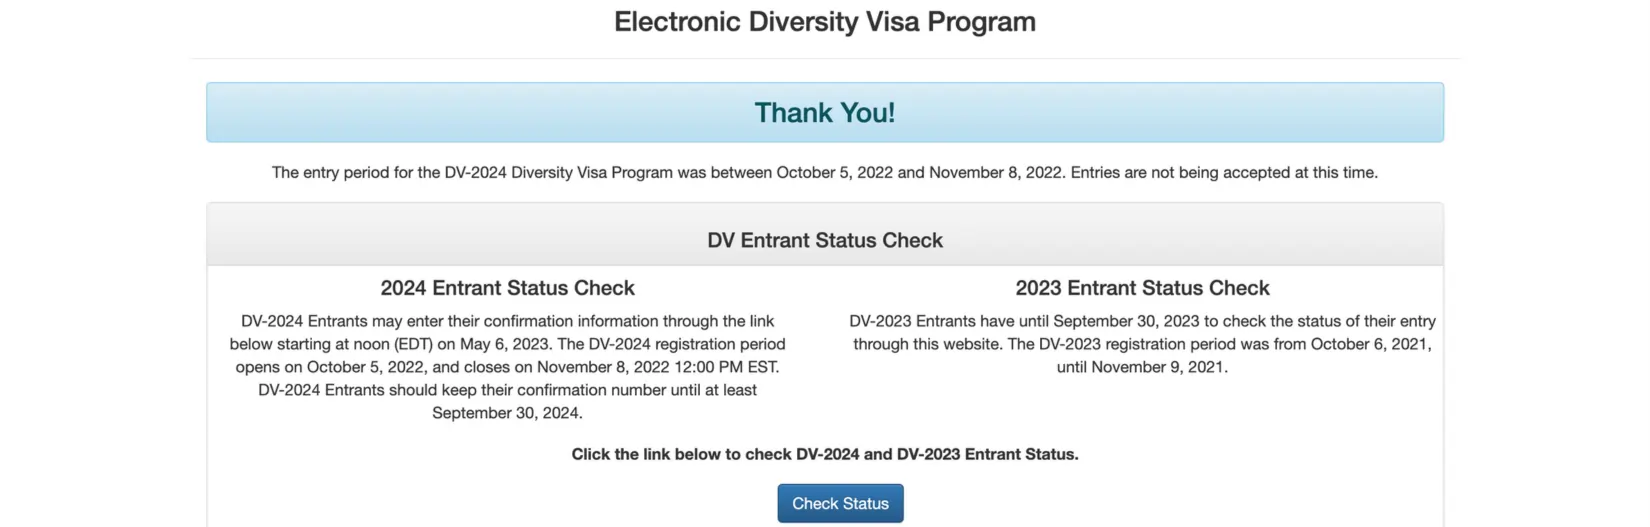 DV Entrant Status Check